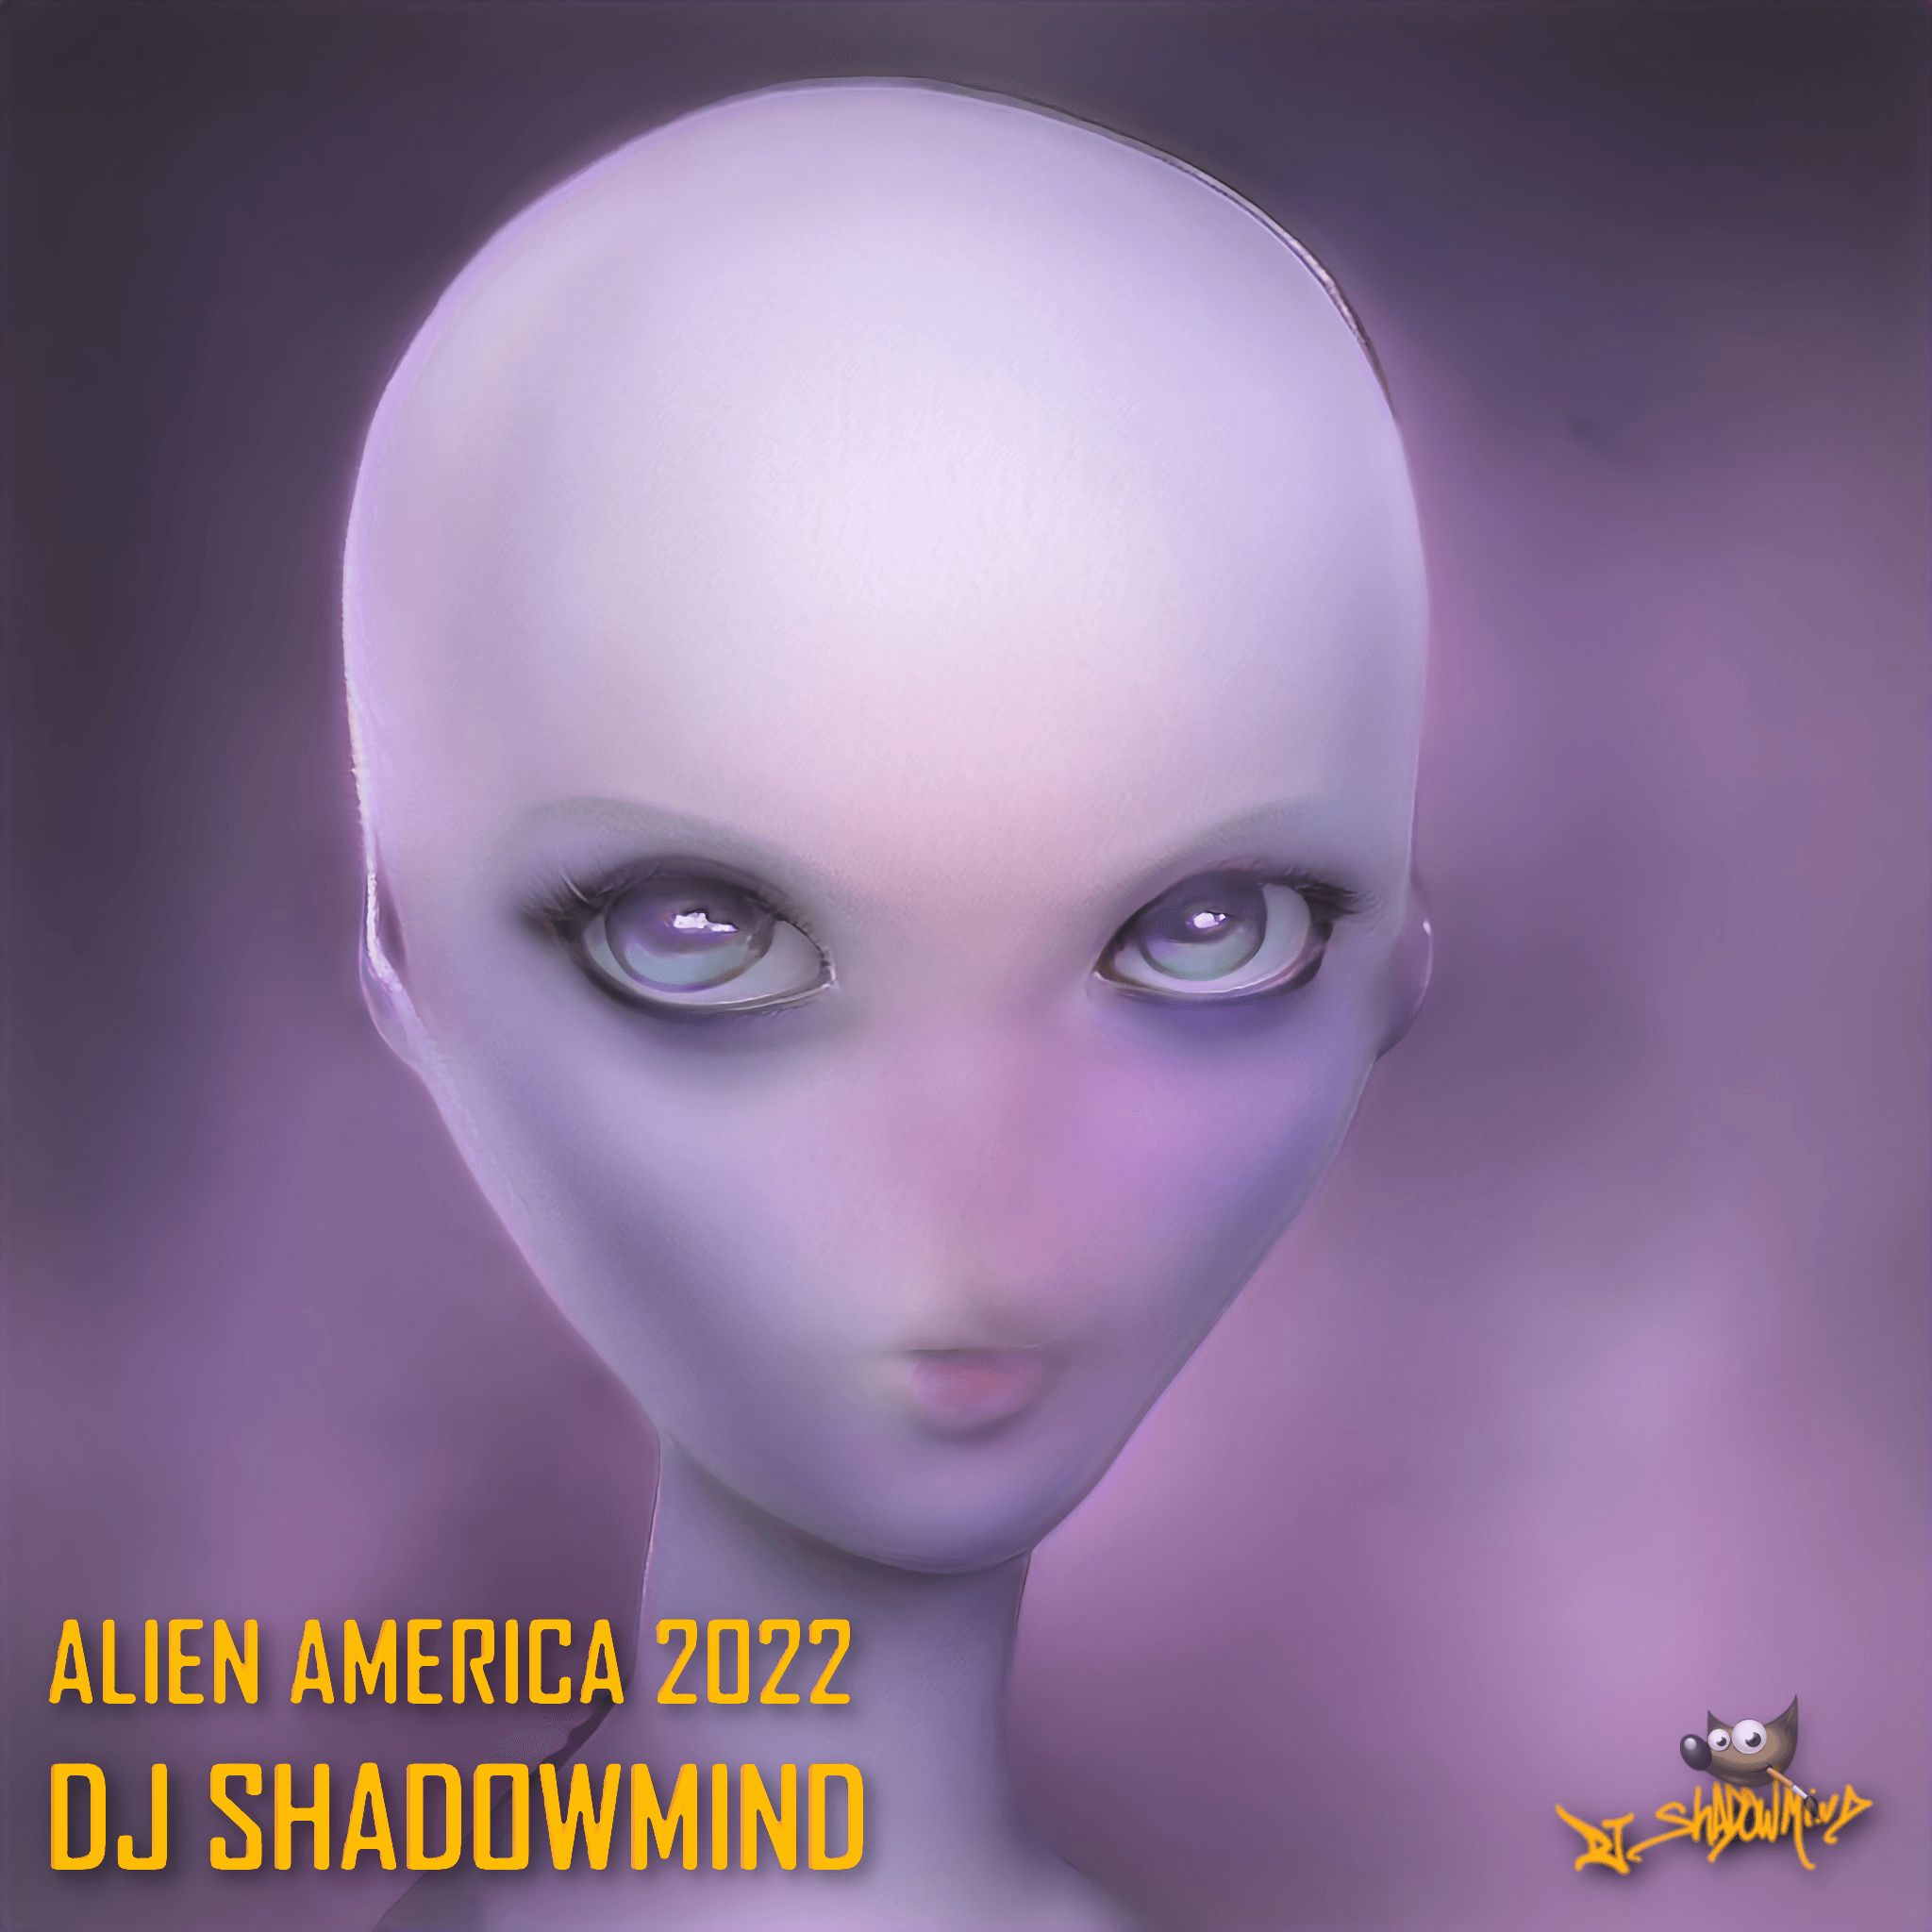 Alien America 2022 - Agent 191